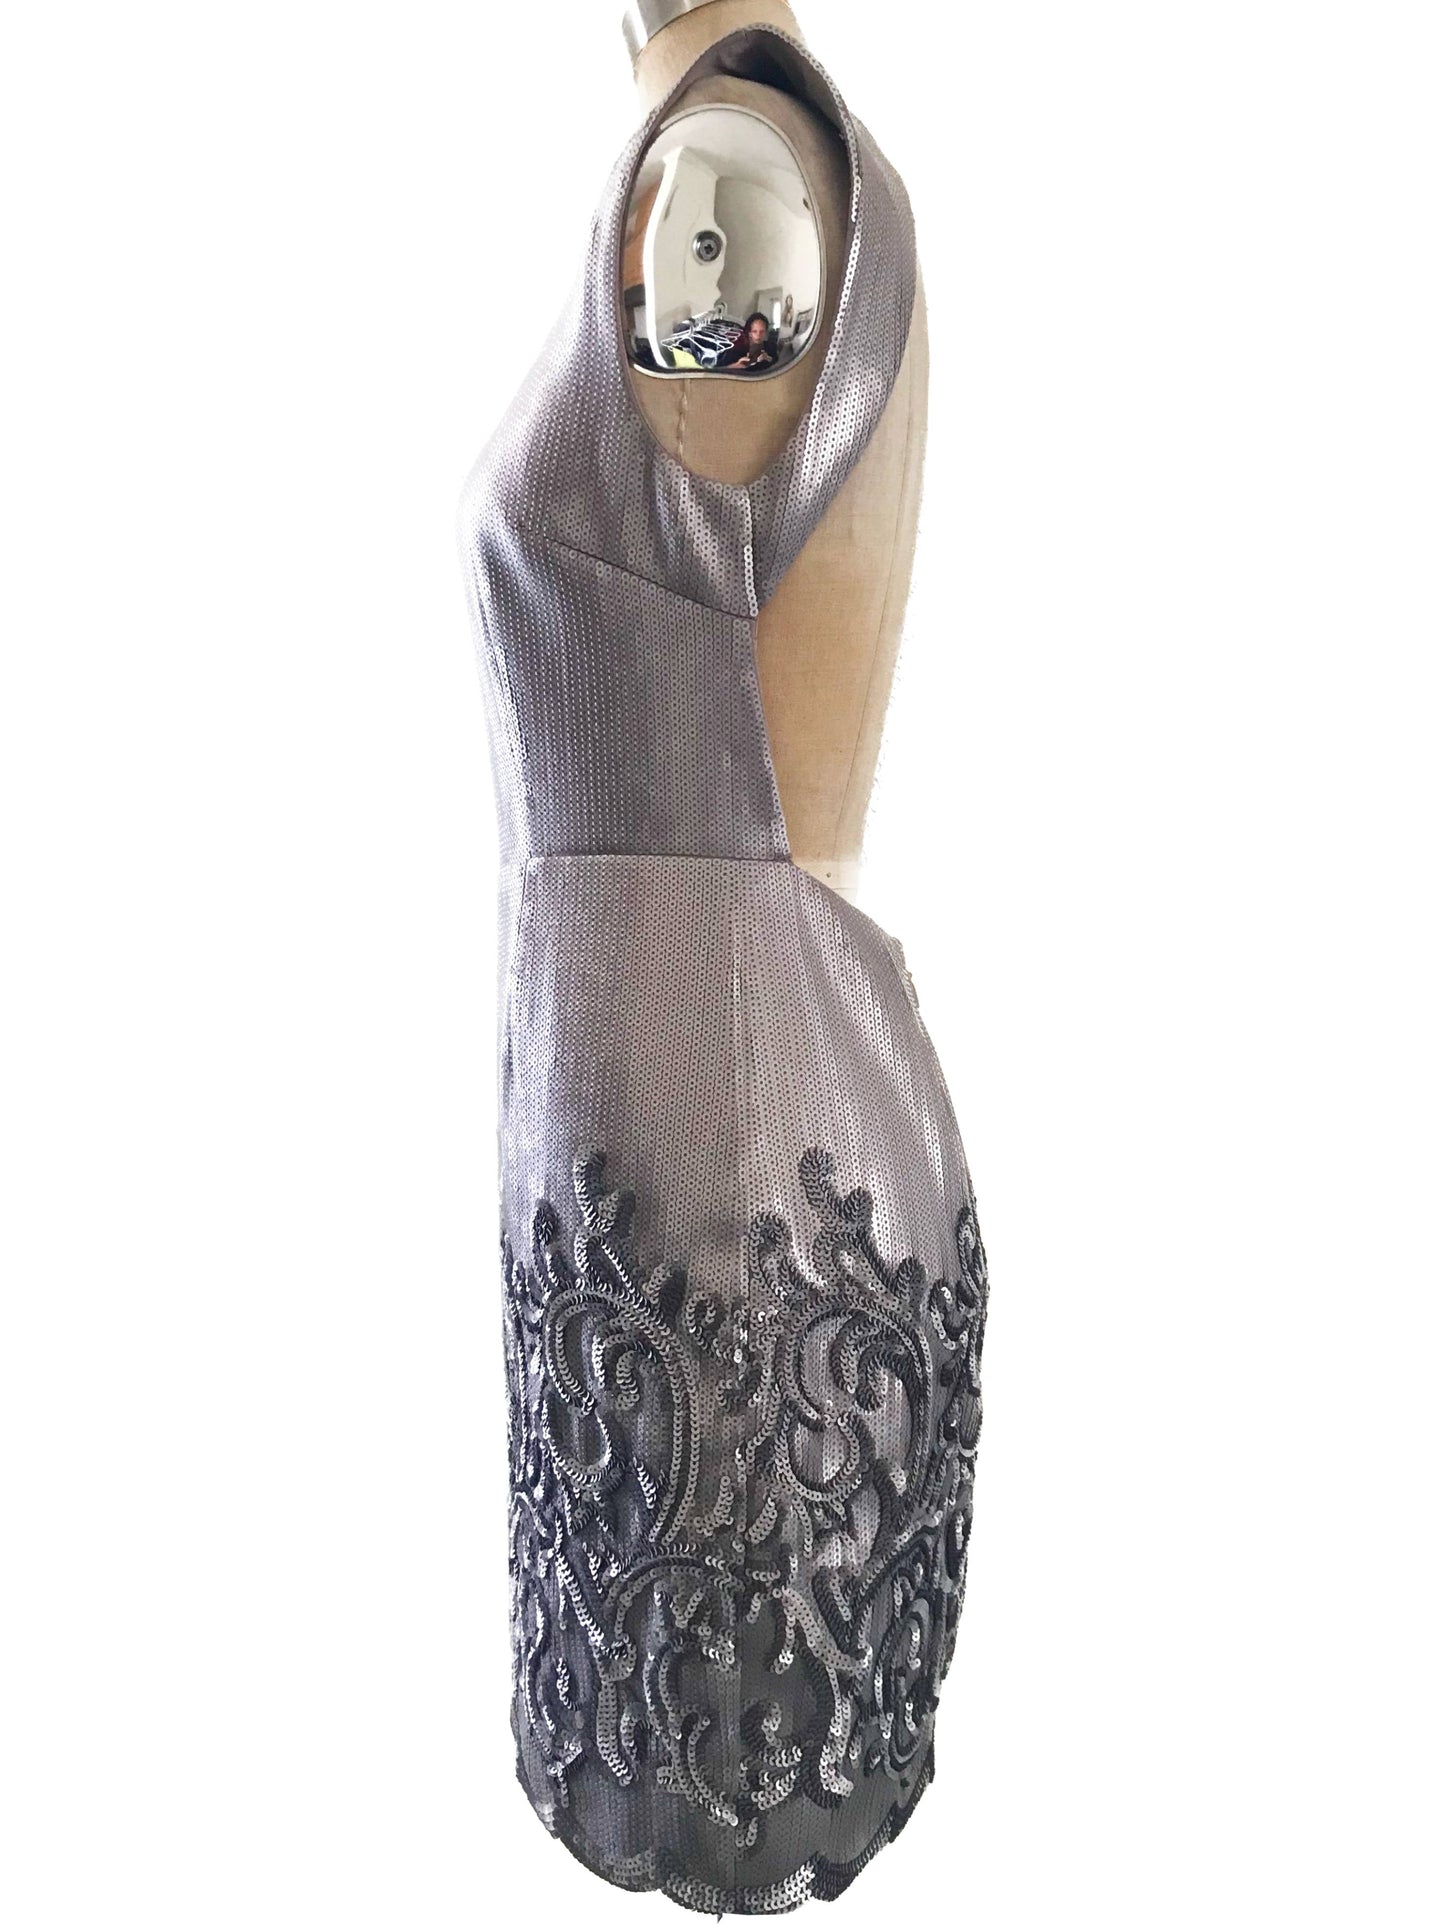 Prelovely |  BCBG MaxAzria Silver Sequin Open Back Cocktail Dress